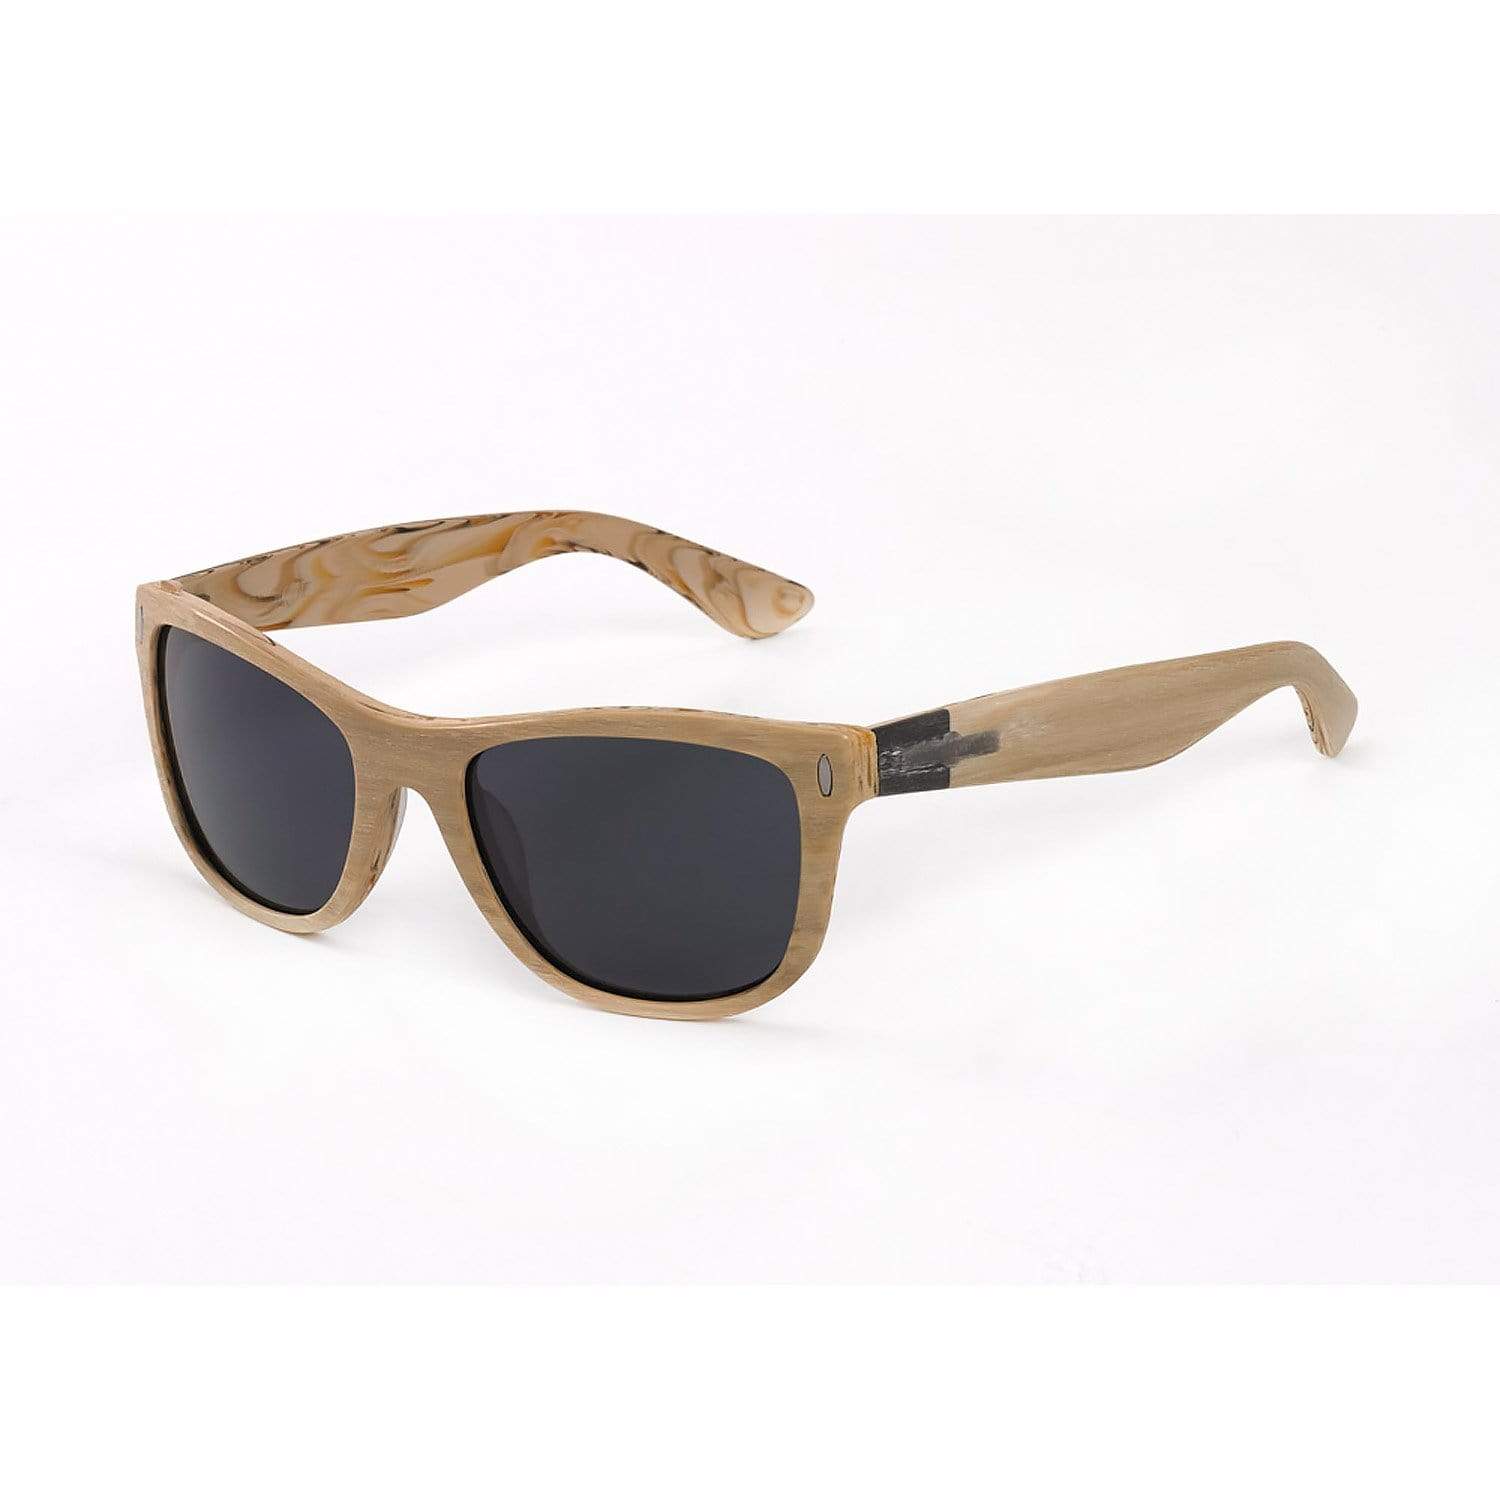 Hang Ten Gold Apparel : Eyewear - Sunglasses Hang Ten Gold The Wavefarer-Pine Wood/Smoke Lens